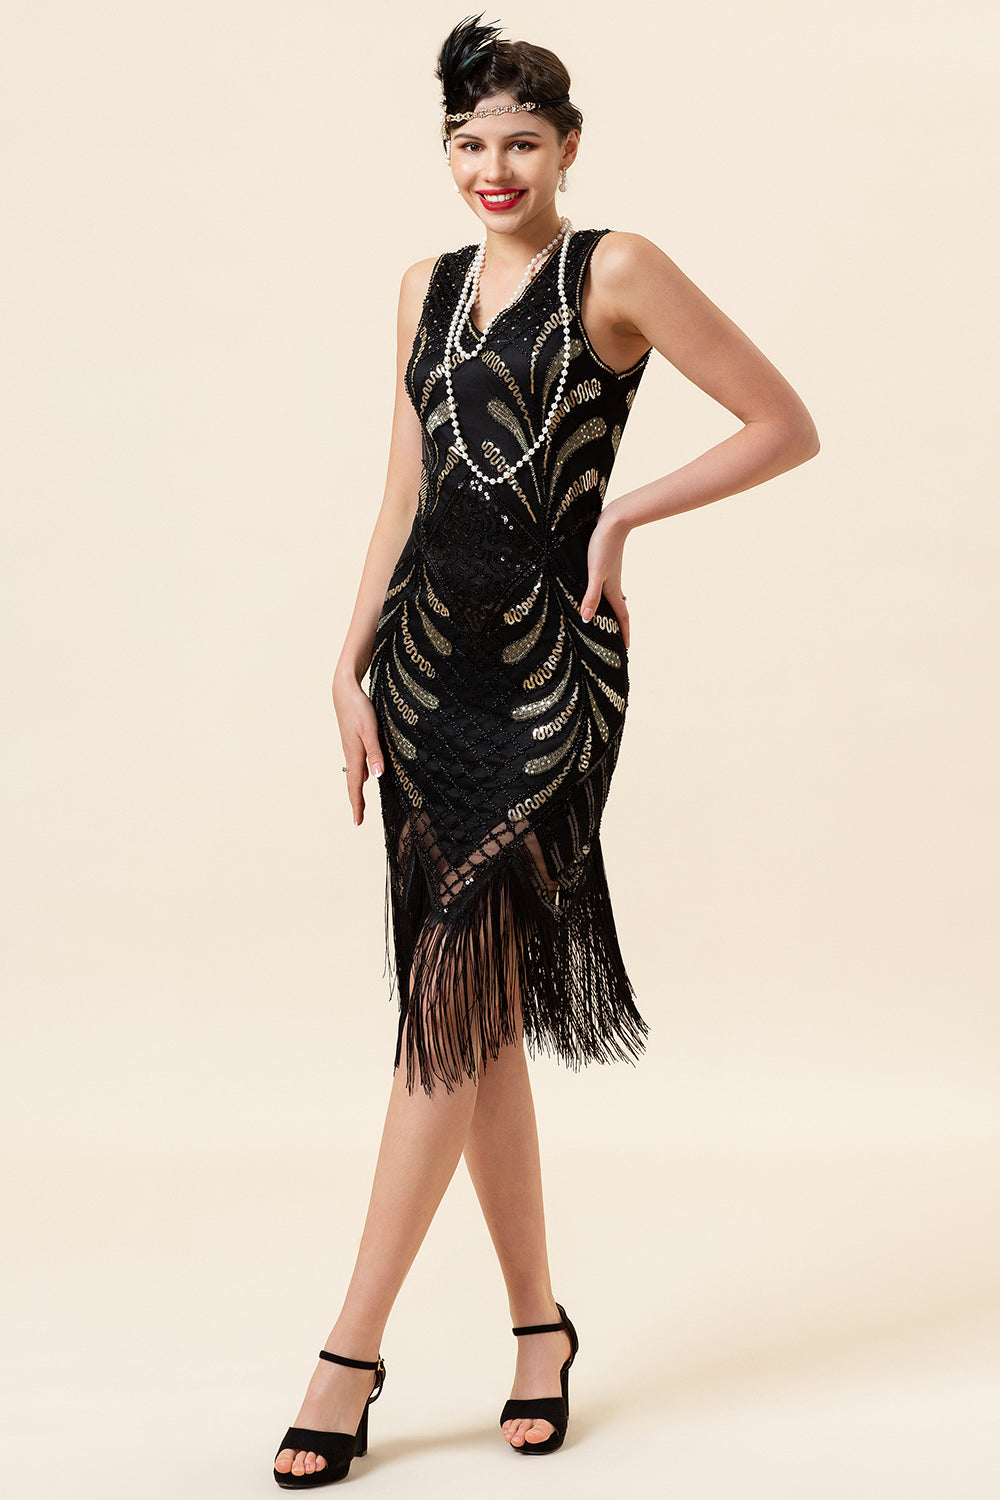 Black Sequins Fringes 1920s Flapper Dress with 20s Accessories Set